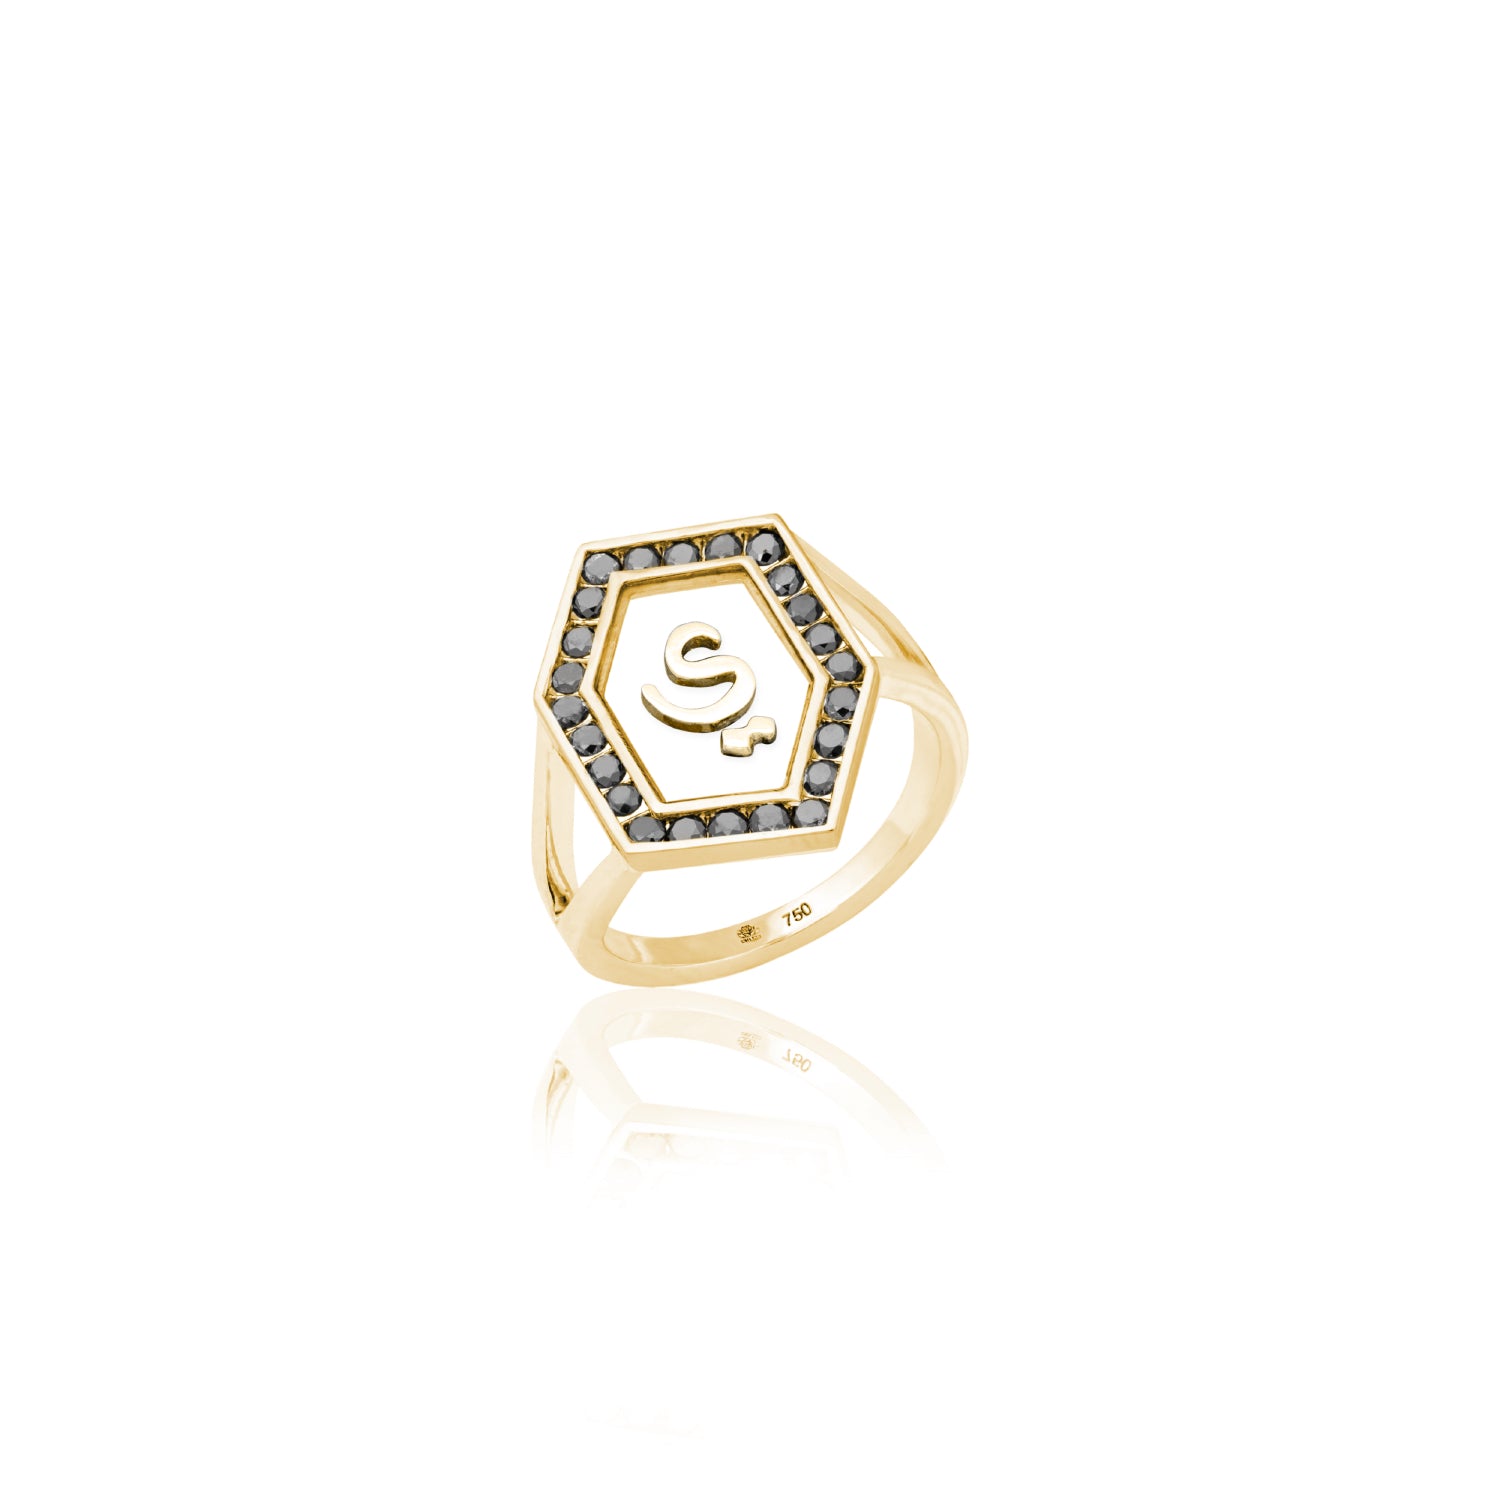 Qamoos 1.0 Letter ي Black Diamond Ring in Yellow Gold